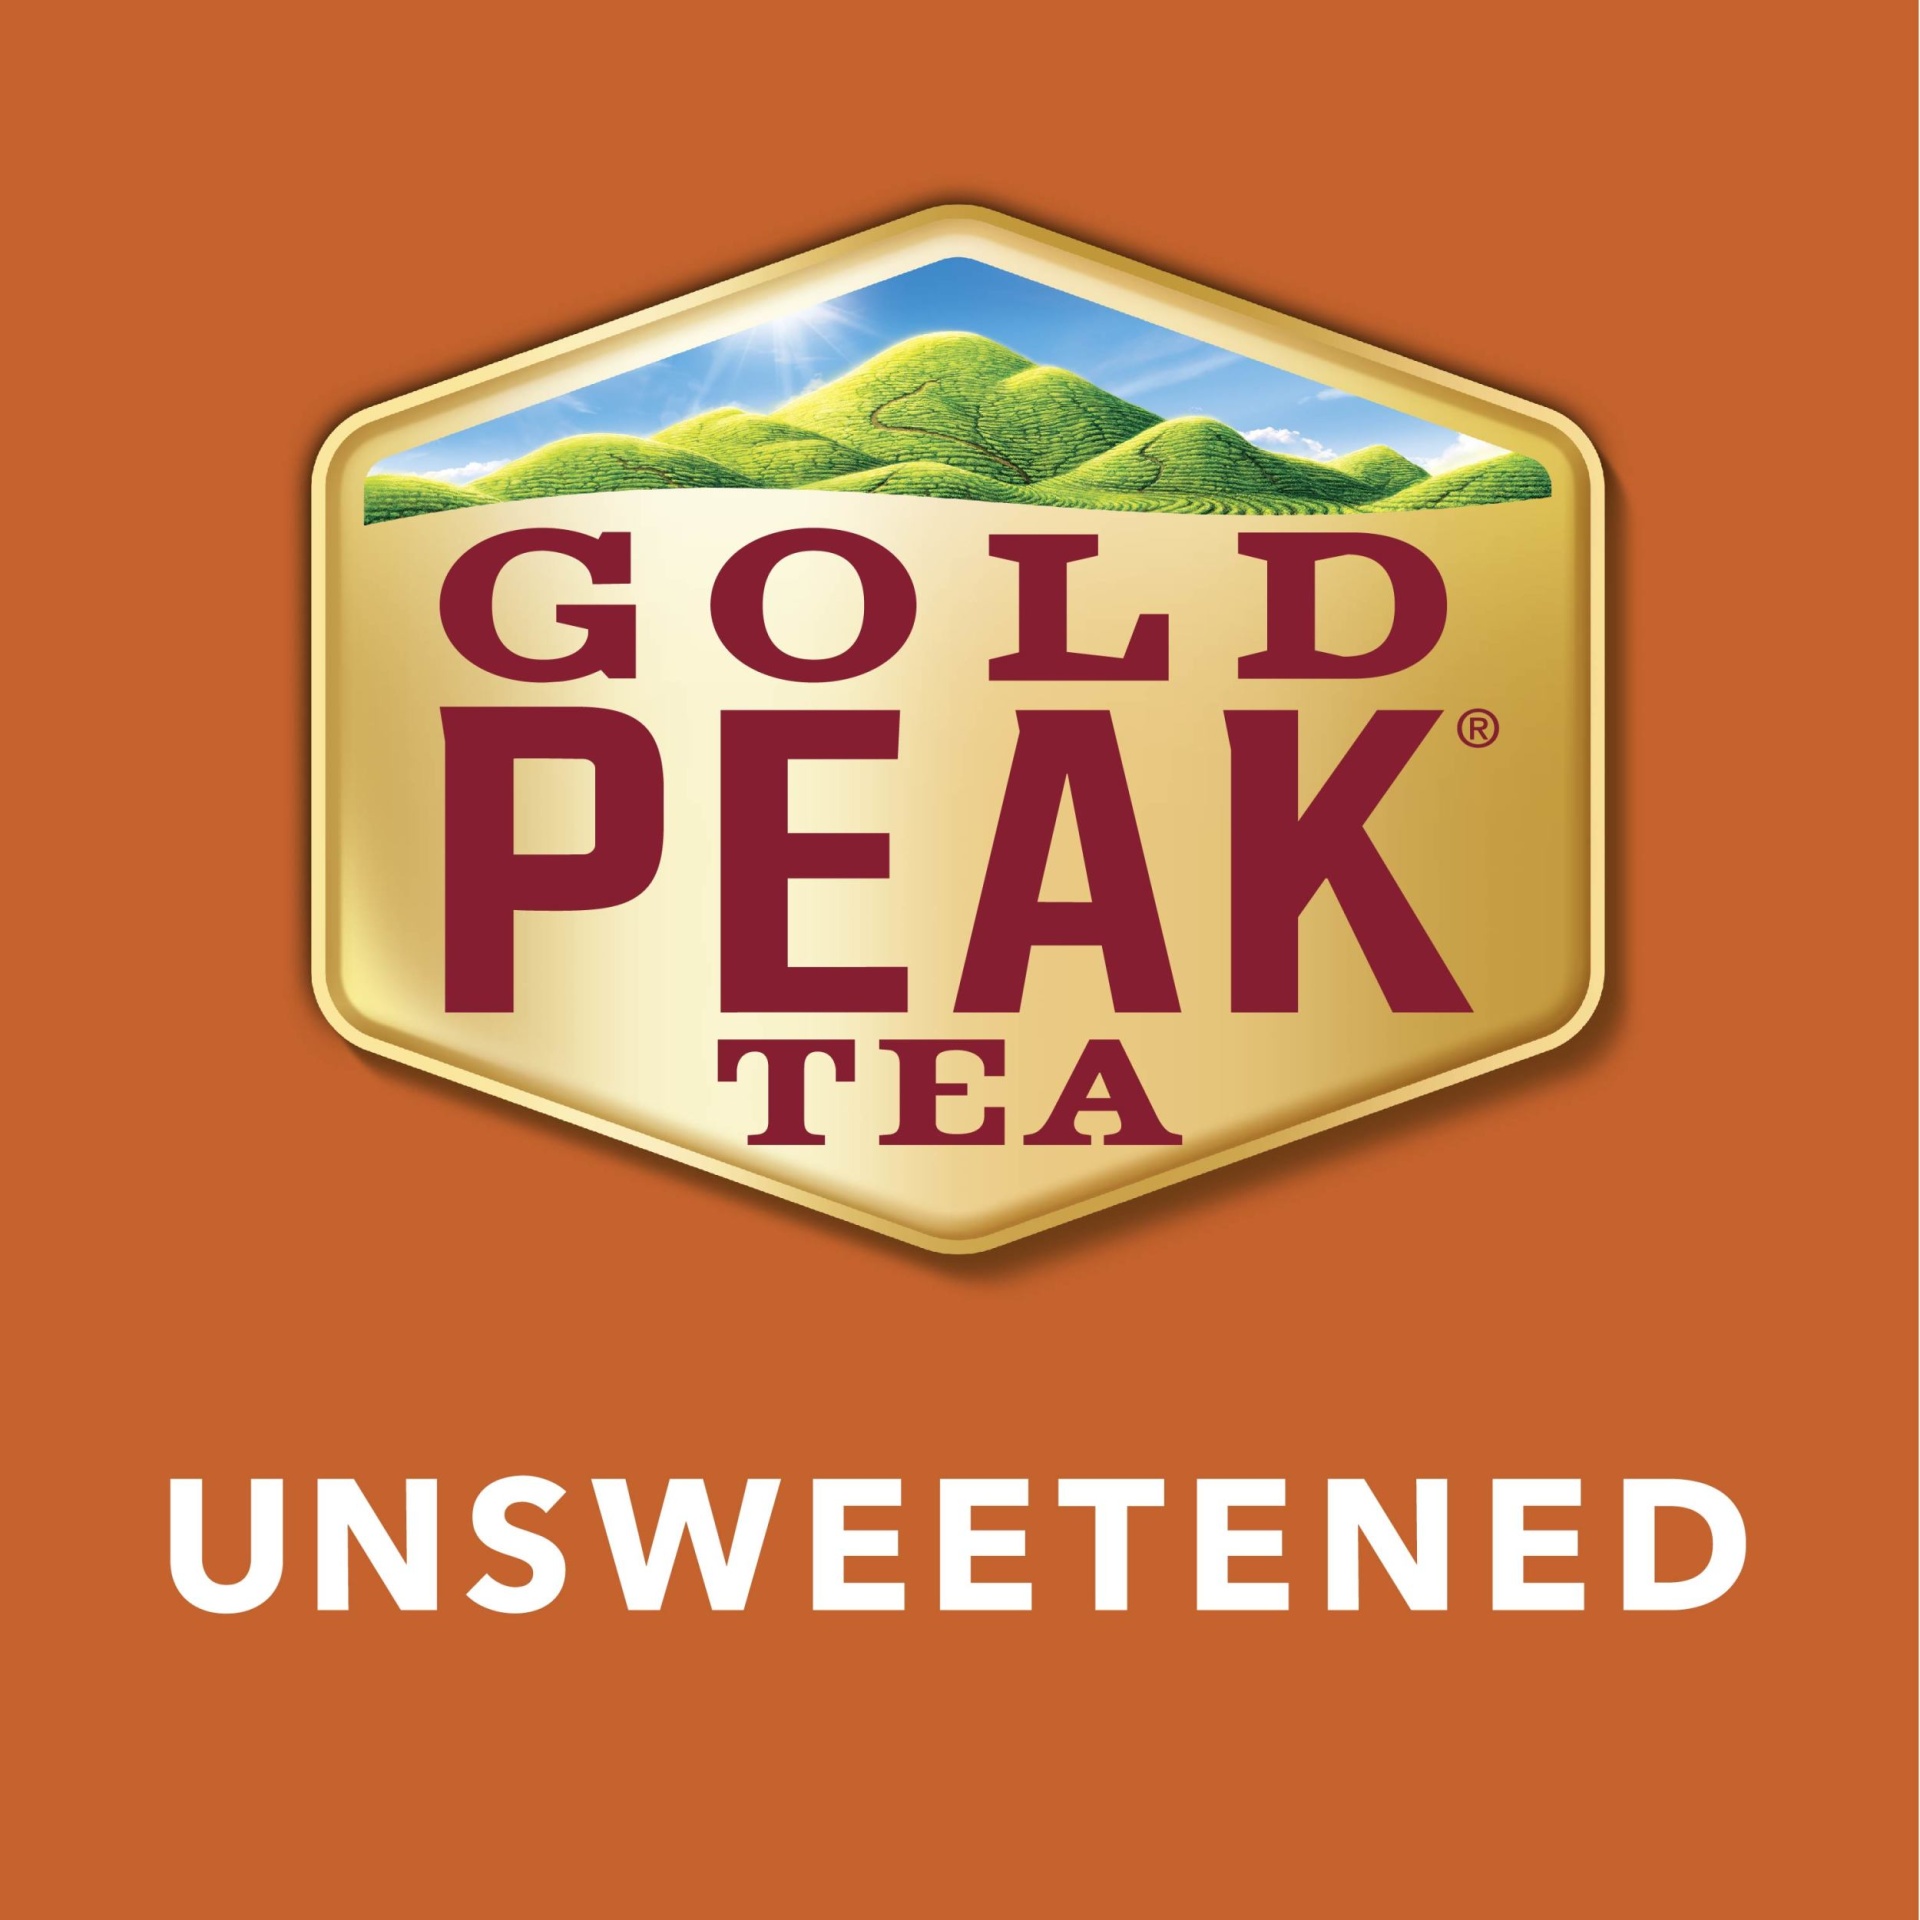 slide 8 of 10, Gold Peak Tea Black Iced Unsweetened - 52 Fl. Oz., 52 fl oz